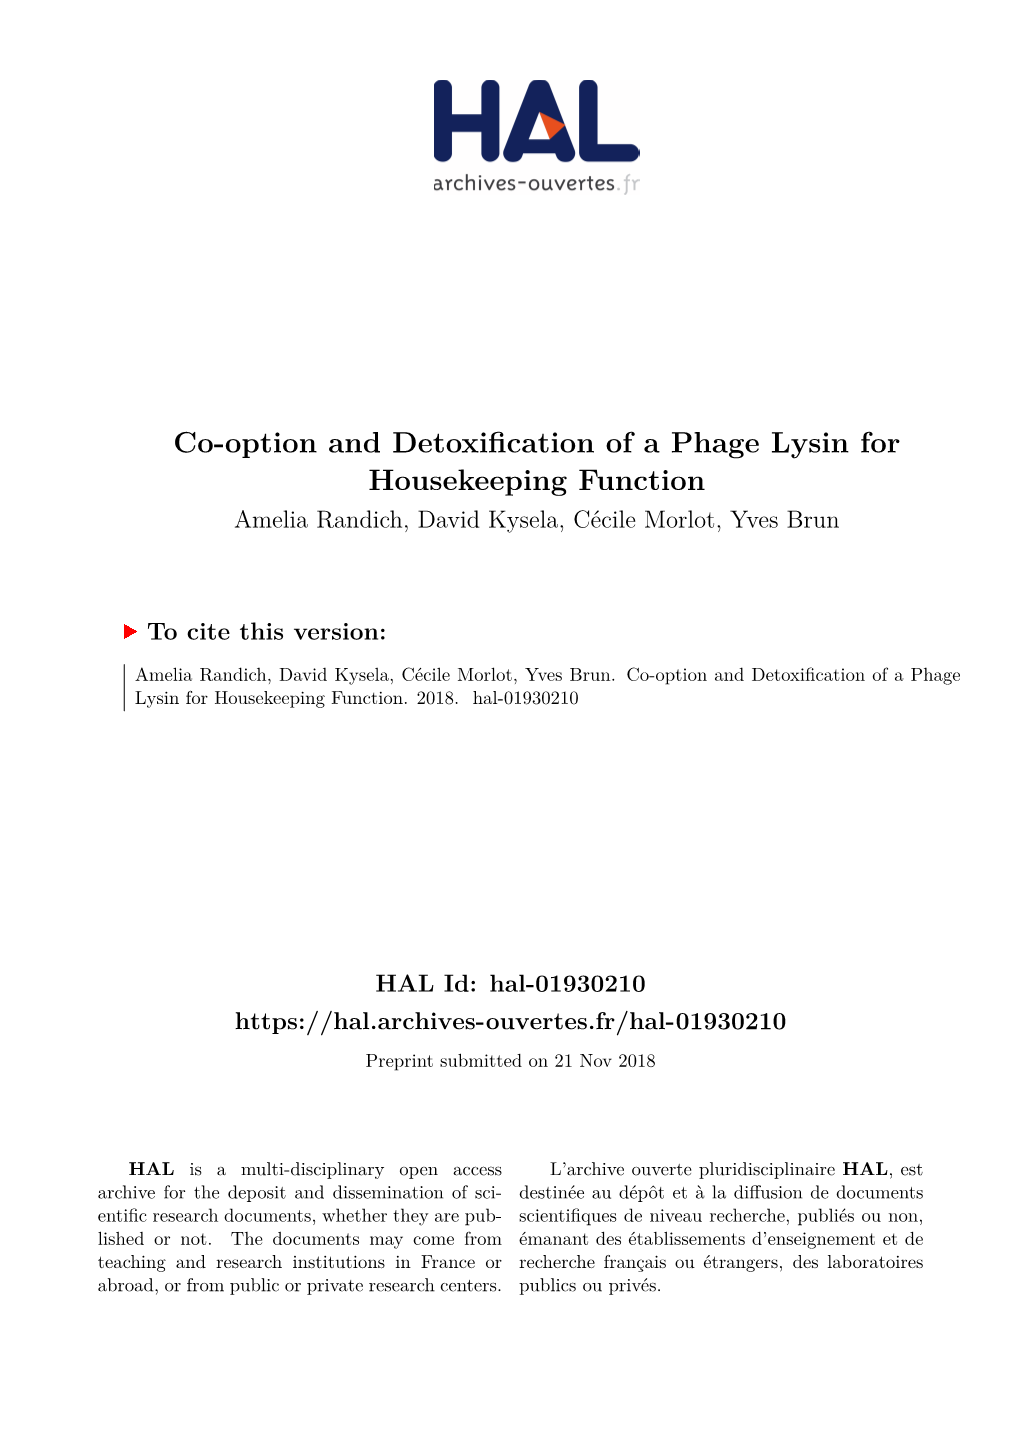 Co-Option and Detoxification of a Phage Lysin for Housekeeping Function Amelia Randich, David Kysela, Cécile Morlot, Yves Brun